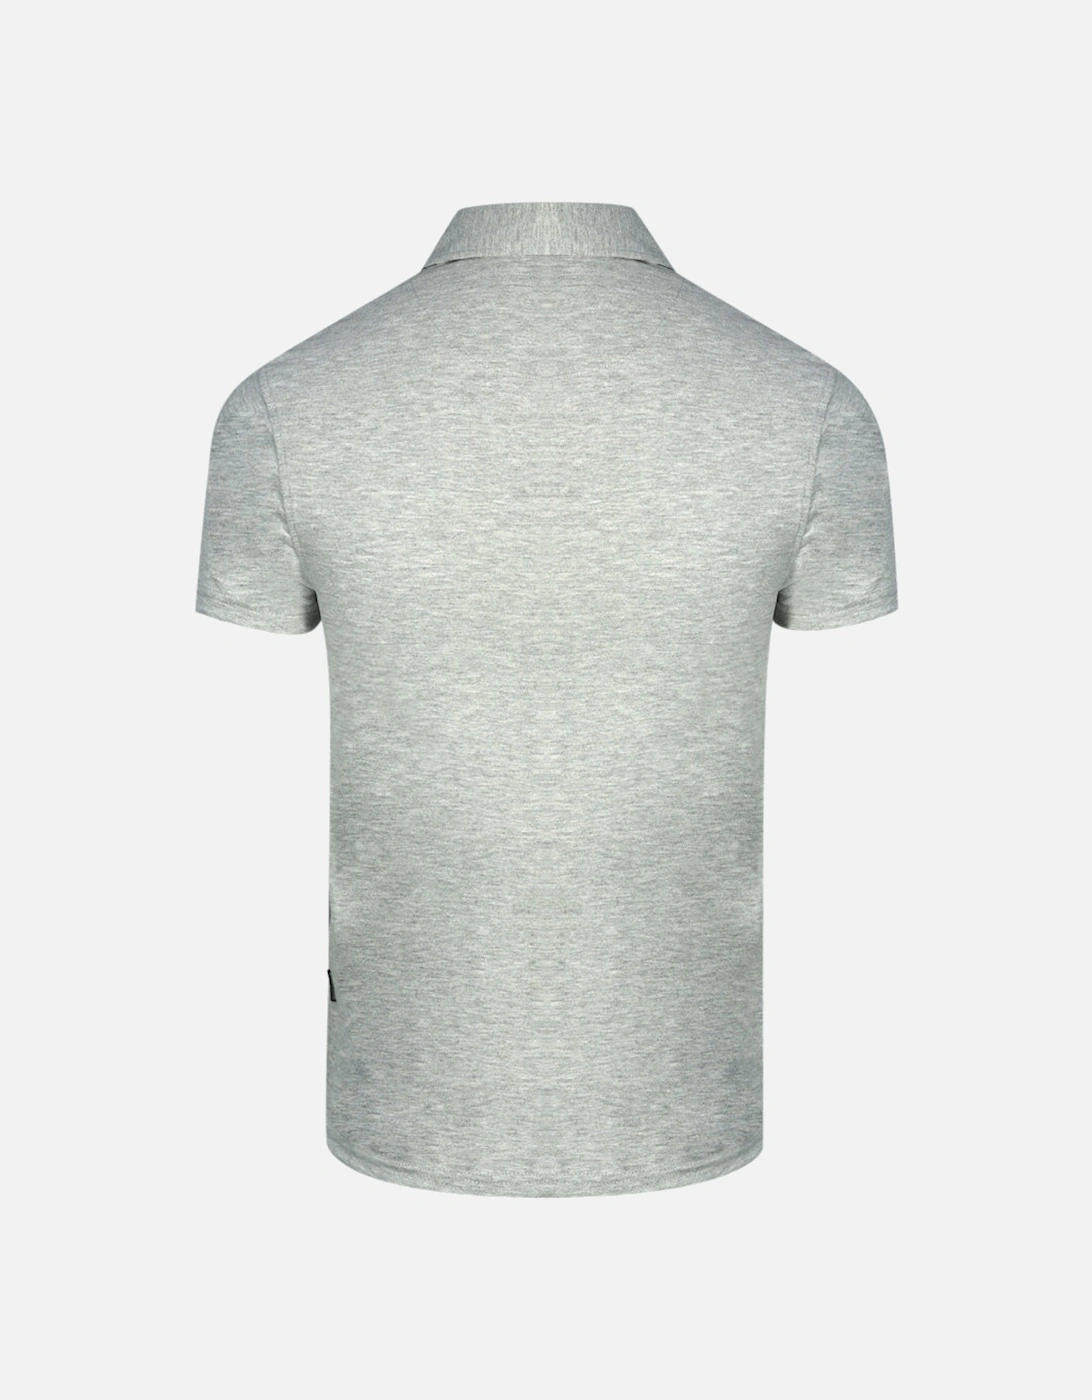 Aldis London Logo Grey Polo Shirt